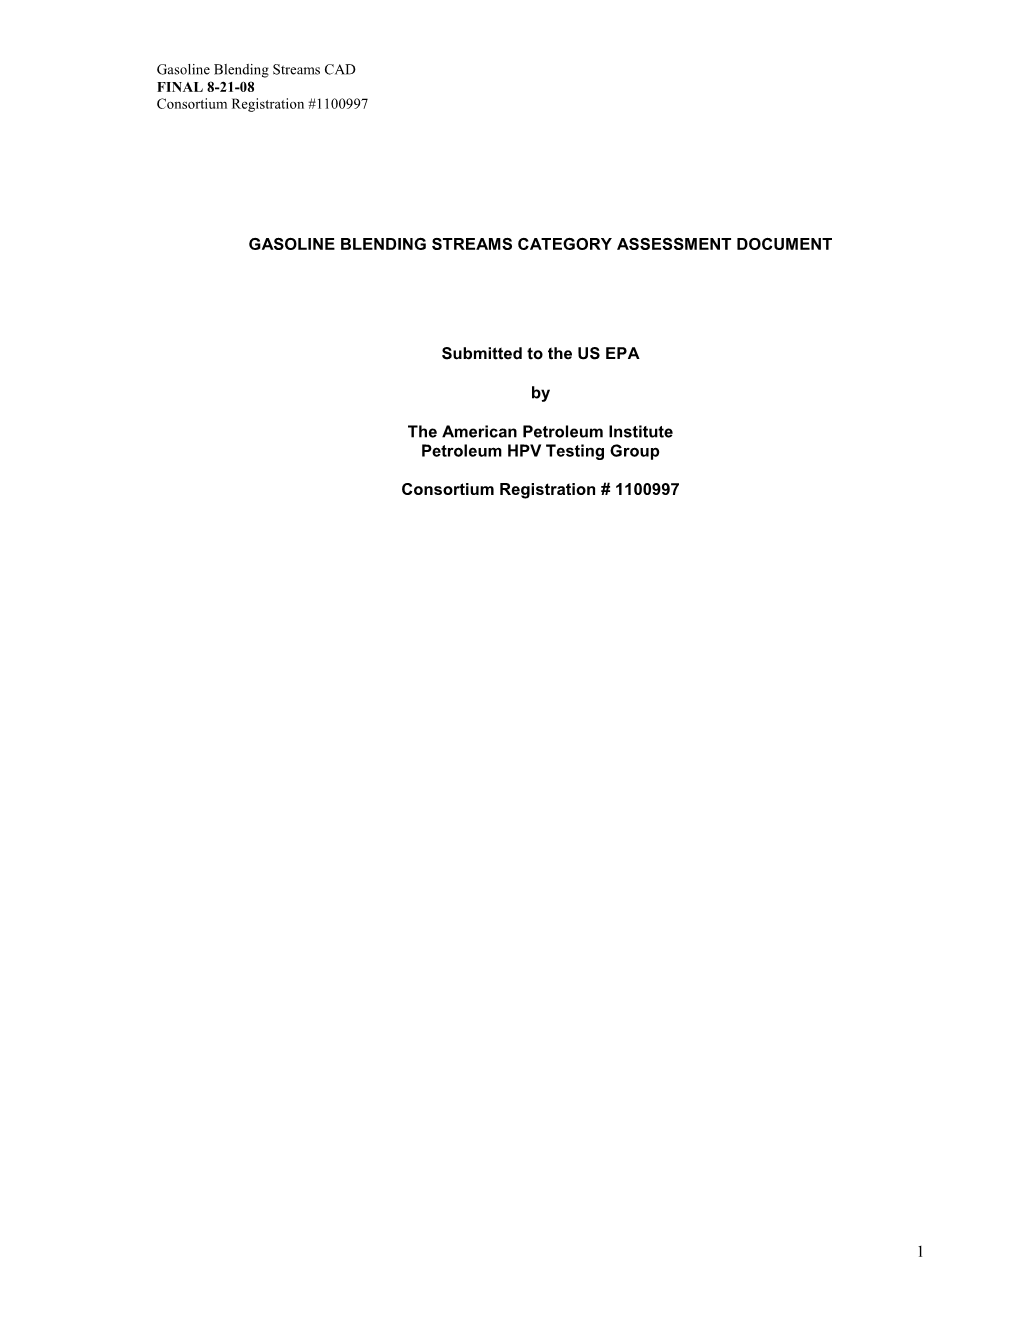 Gasoline Blending Streams Category Assessment Document